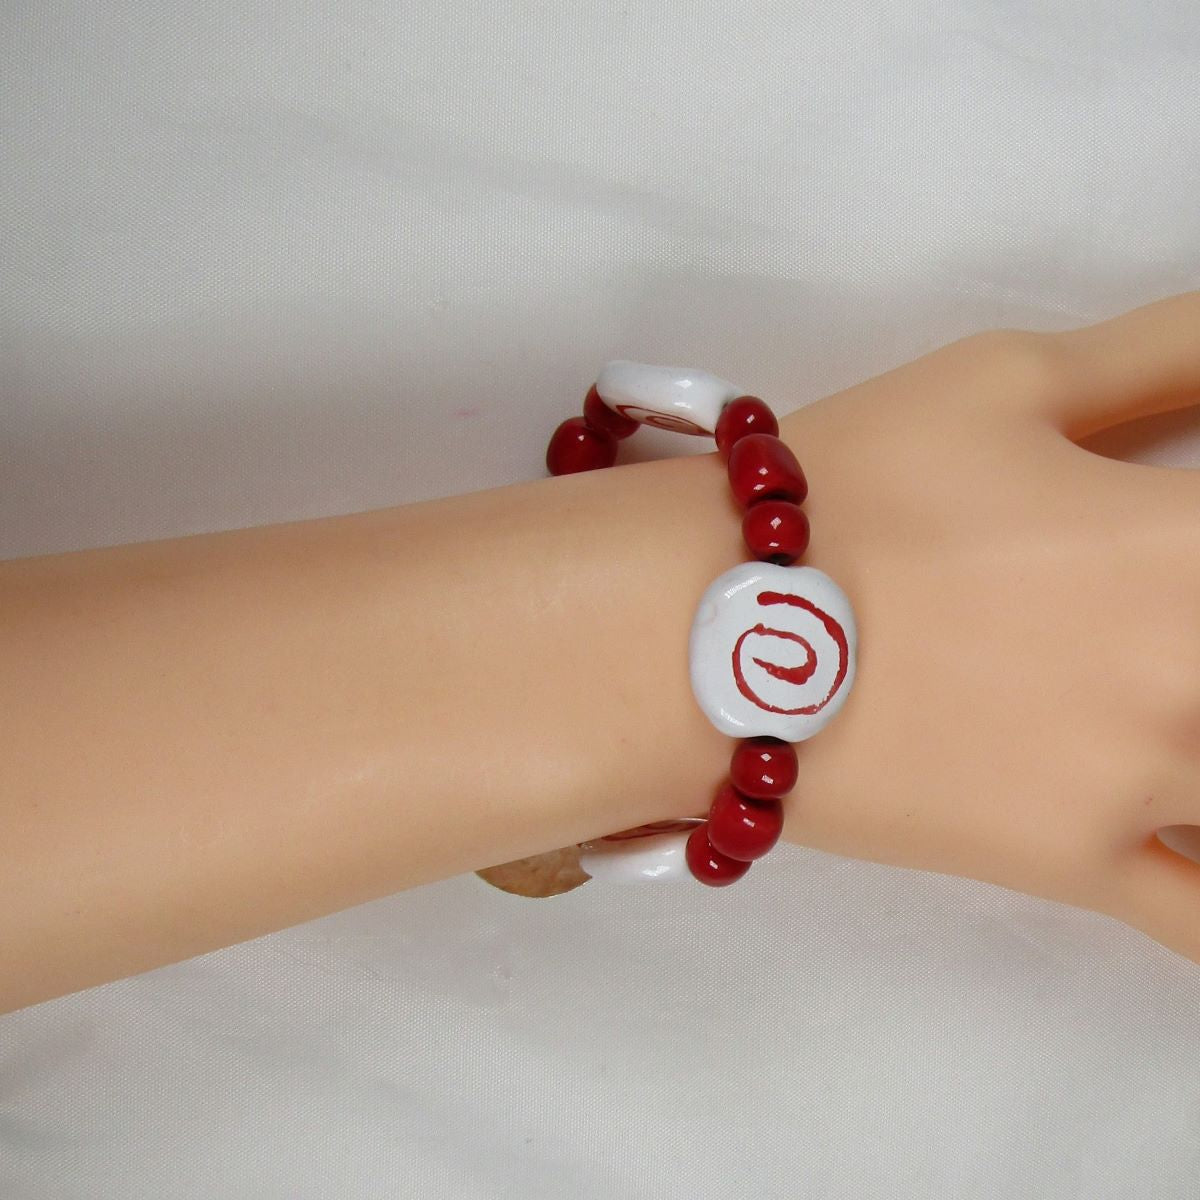 White and Red Kazuri Bracelet Handmade Fair Trade Beaed - VP's Jewelry